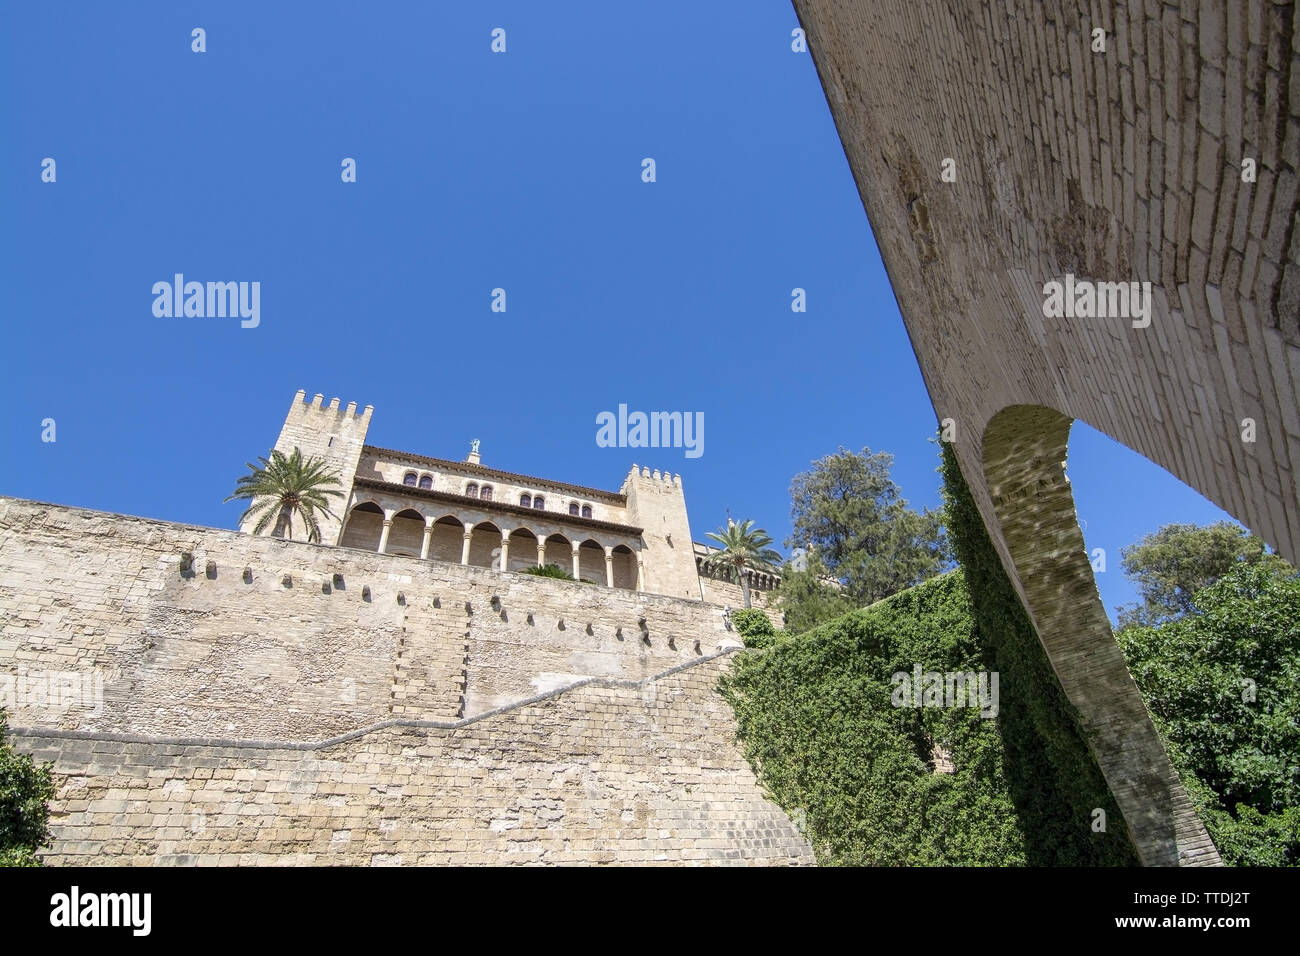 Almudaina palace view with vault in Palma de Mallorca, Spain. Stock Photo